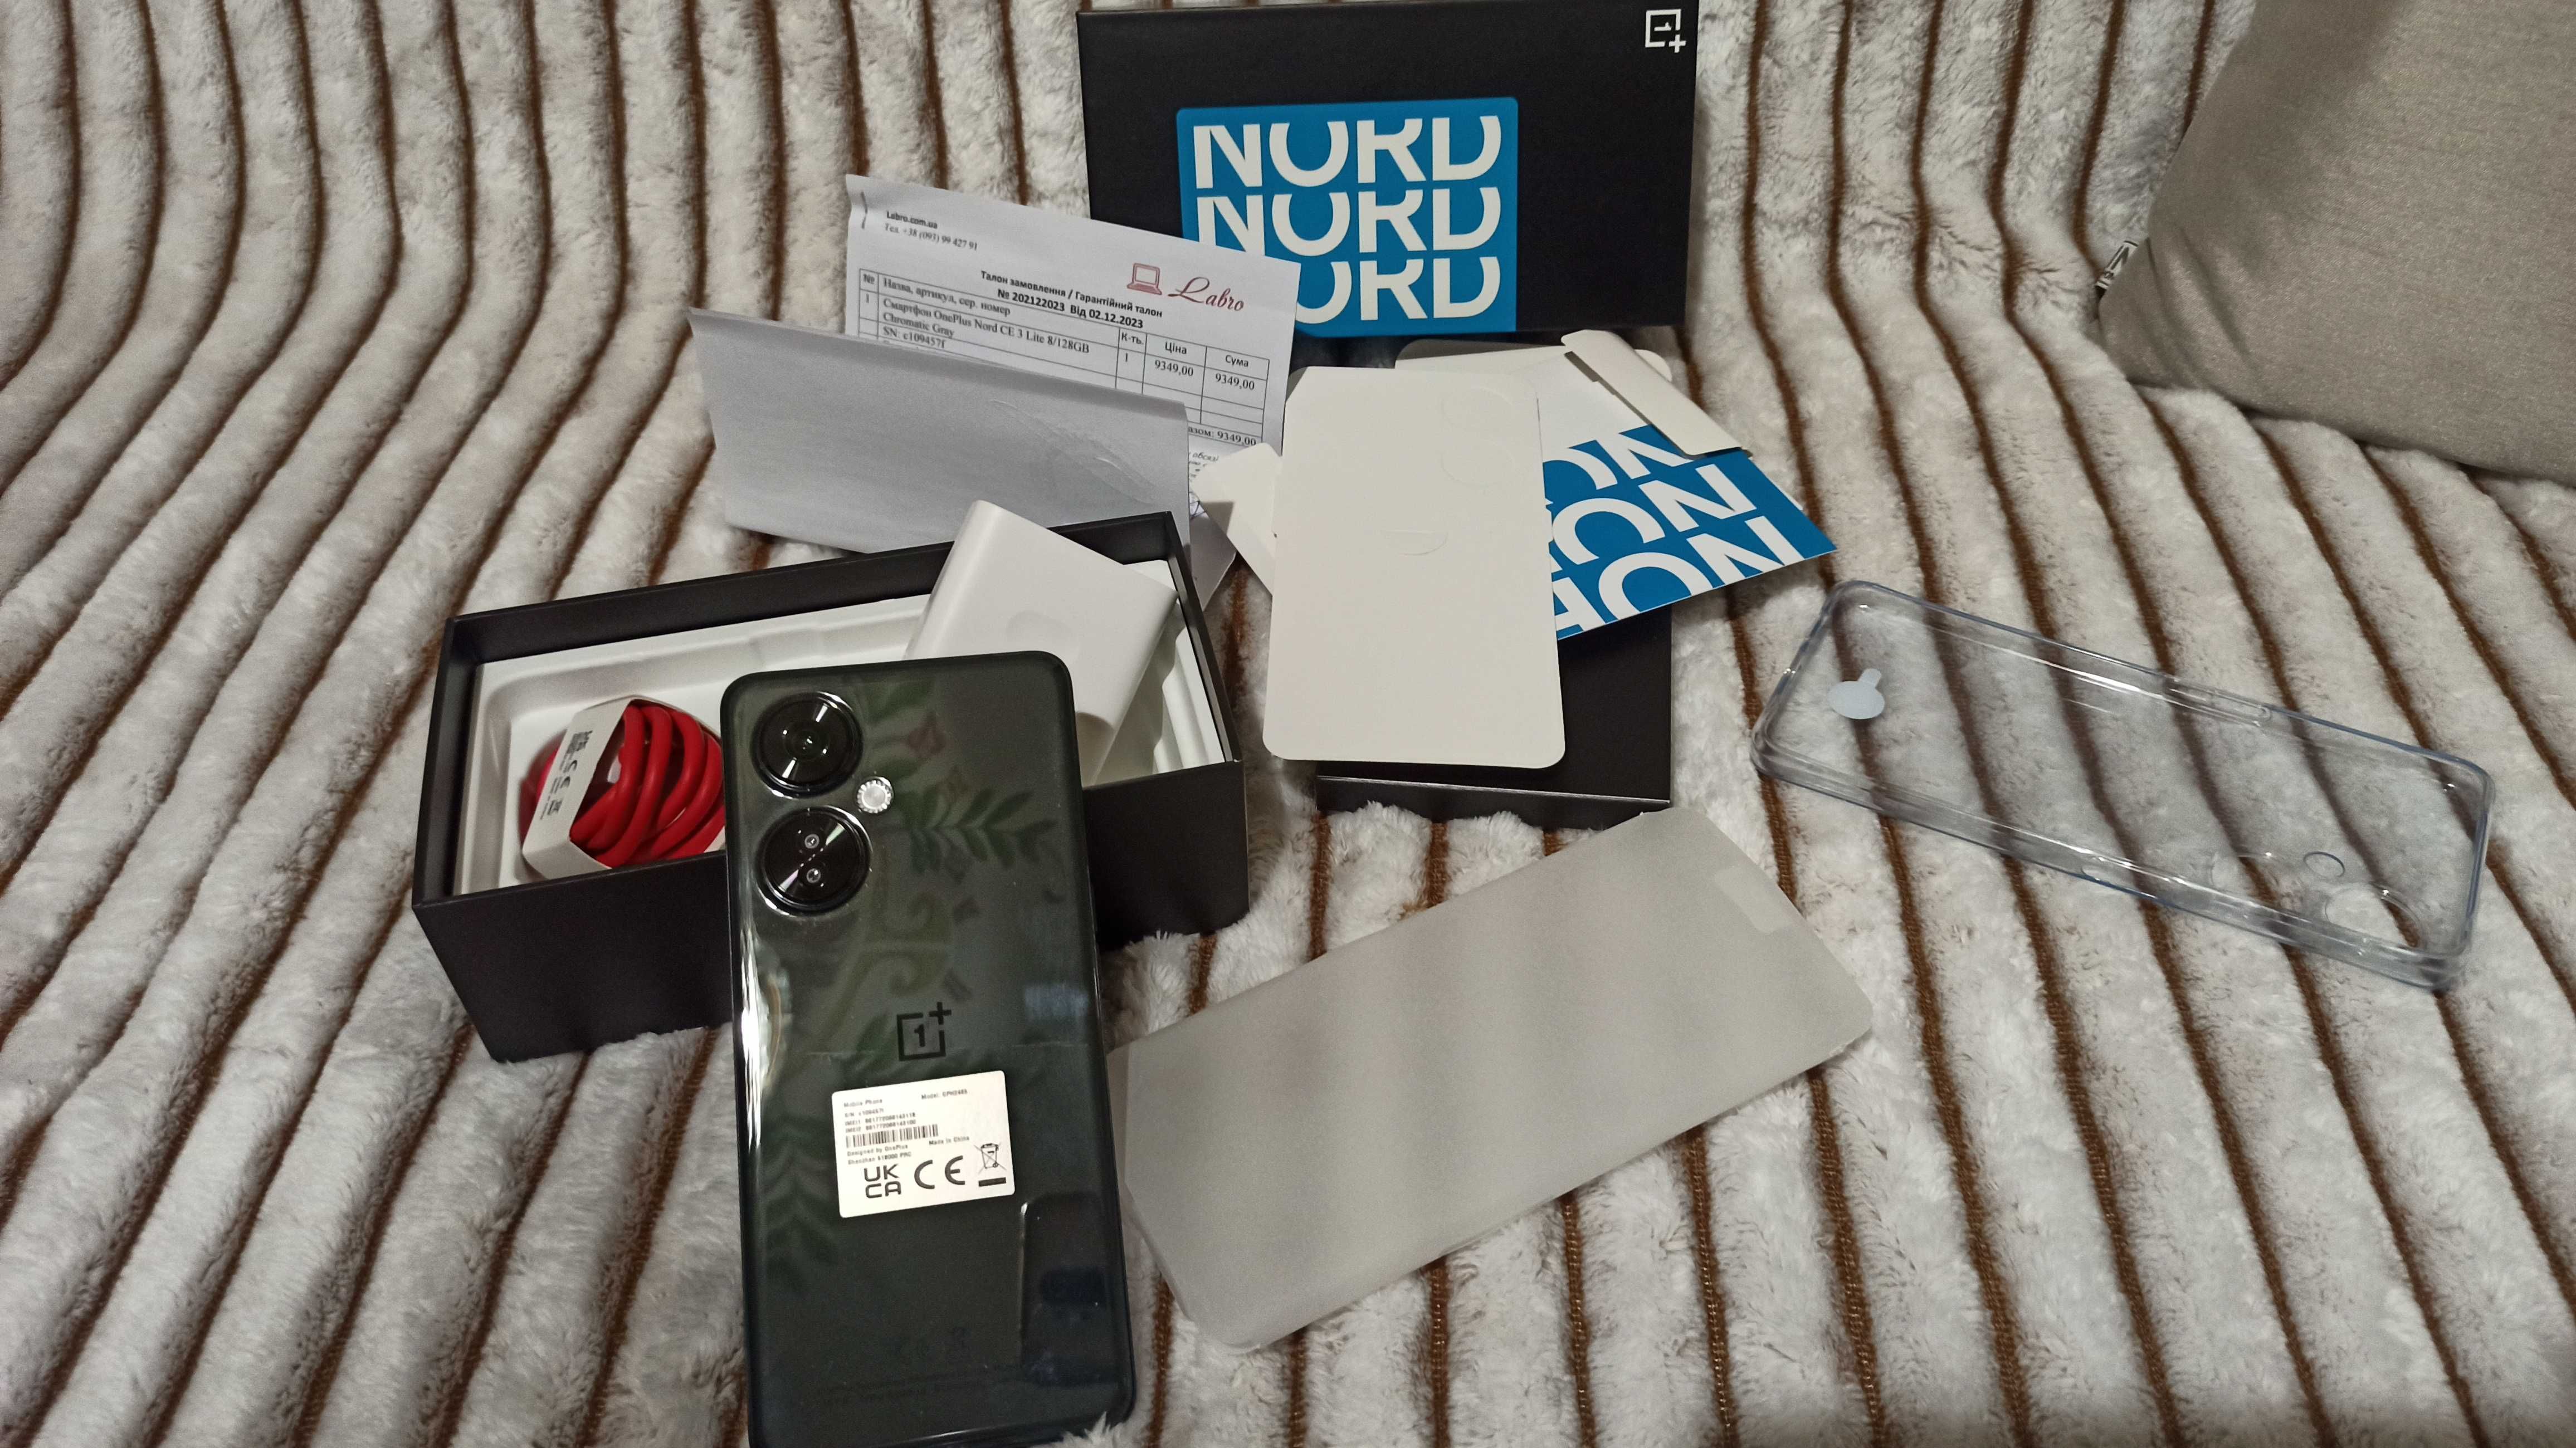 Смартфон OnePlus Nord CE 3 Lite 5G 8/128Gb Chromatic Gray, гарантія